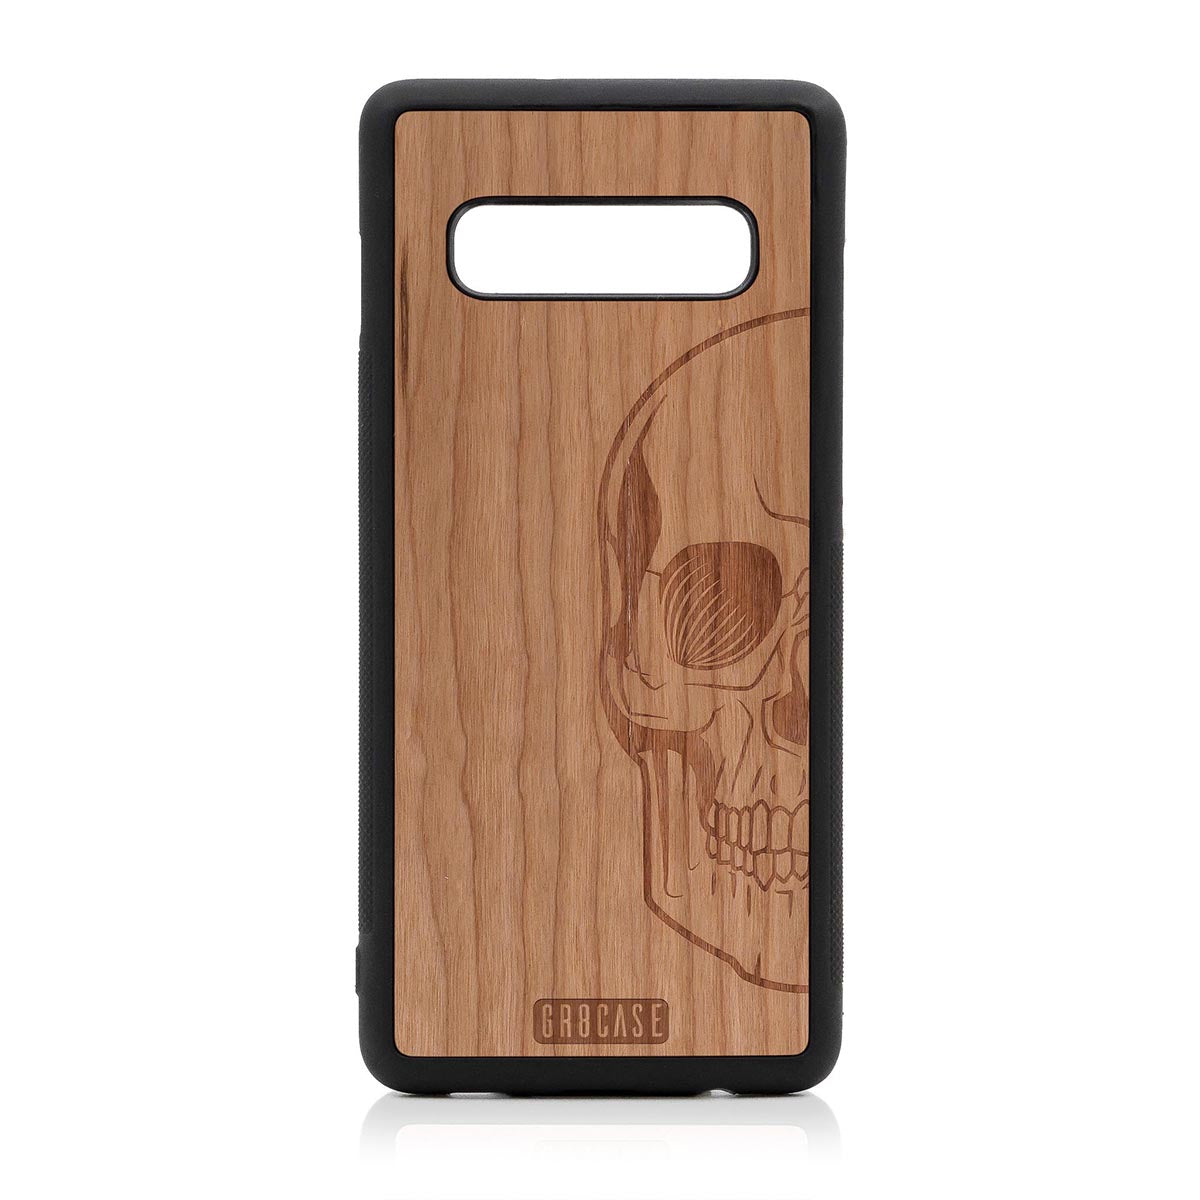 Half Skull Design Wood Case Samsung Galaxy S10 Plus by GR8CASE